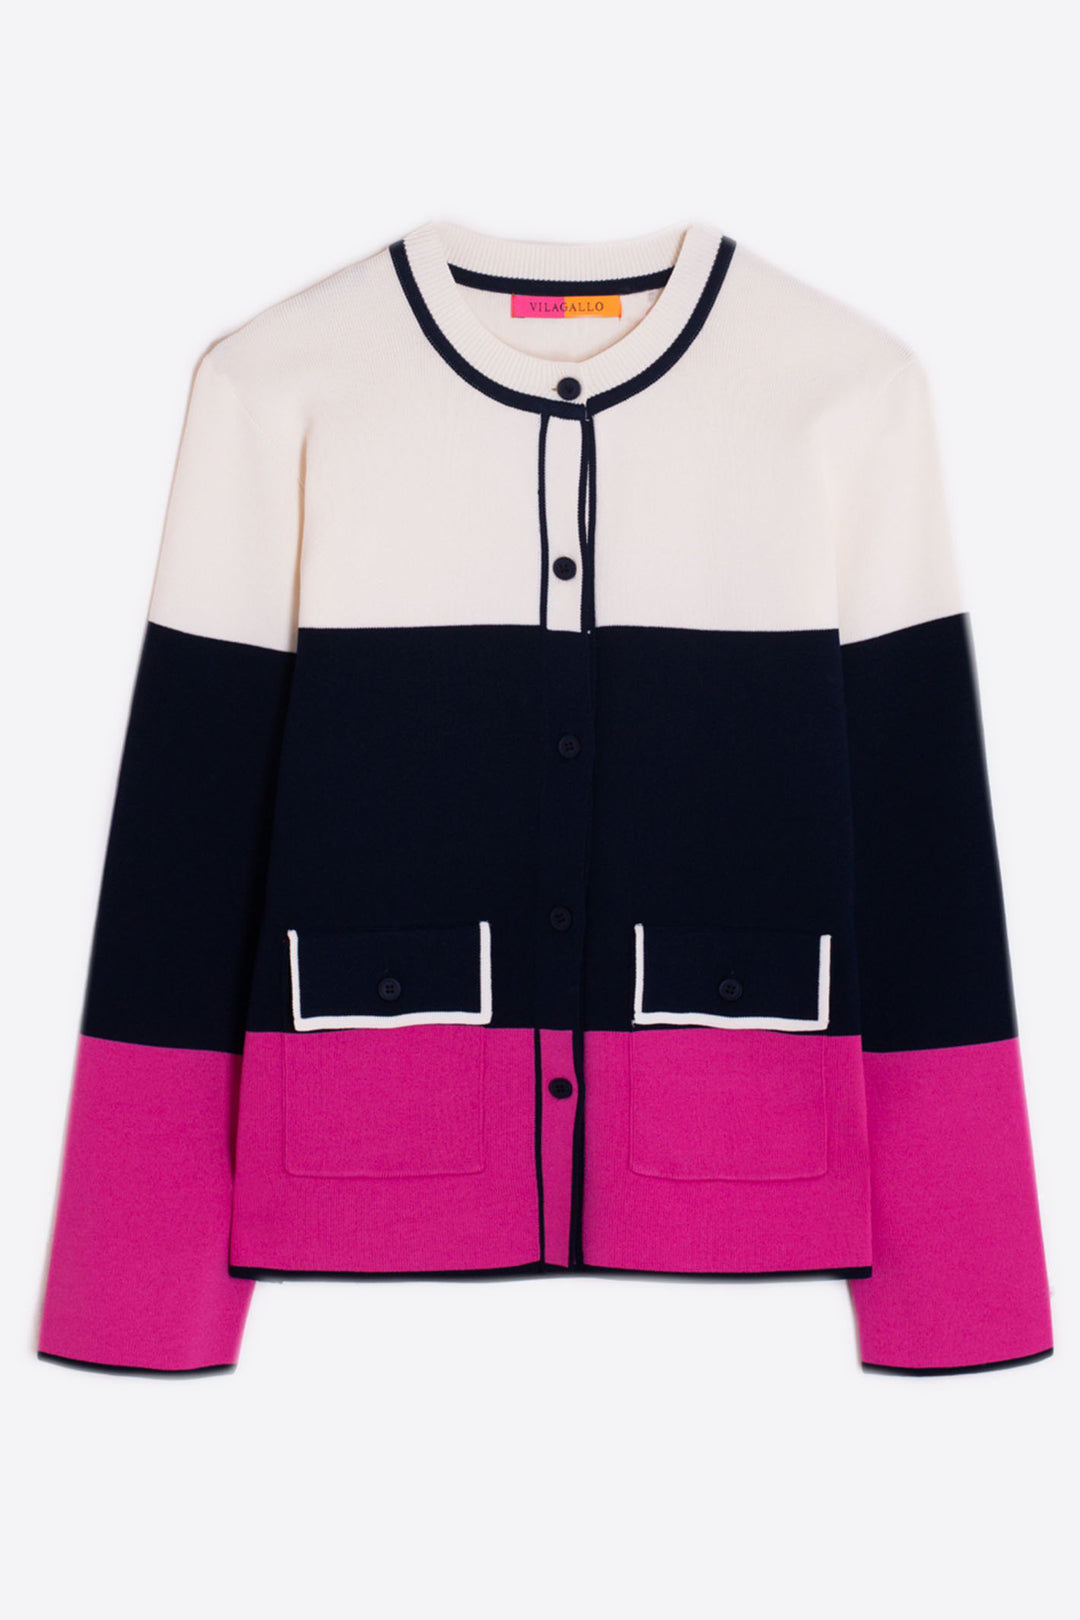 Vilagallo 30902 Cream Navy Pink Block Colour Round Neck Cardigan - Olivia Grace Fashion